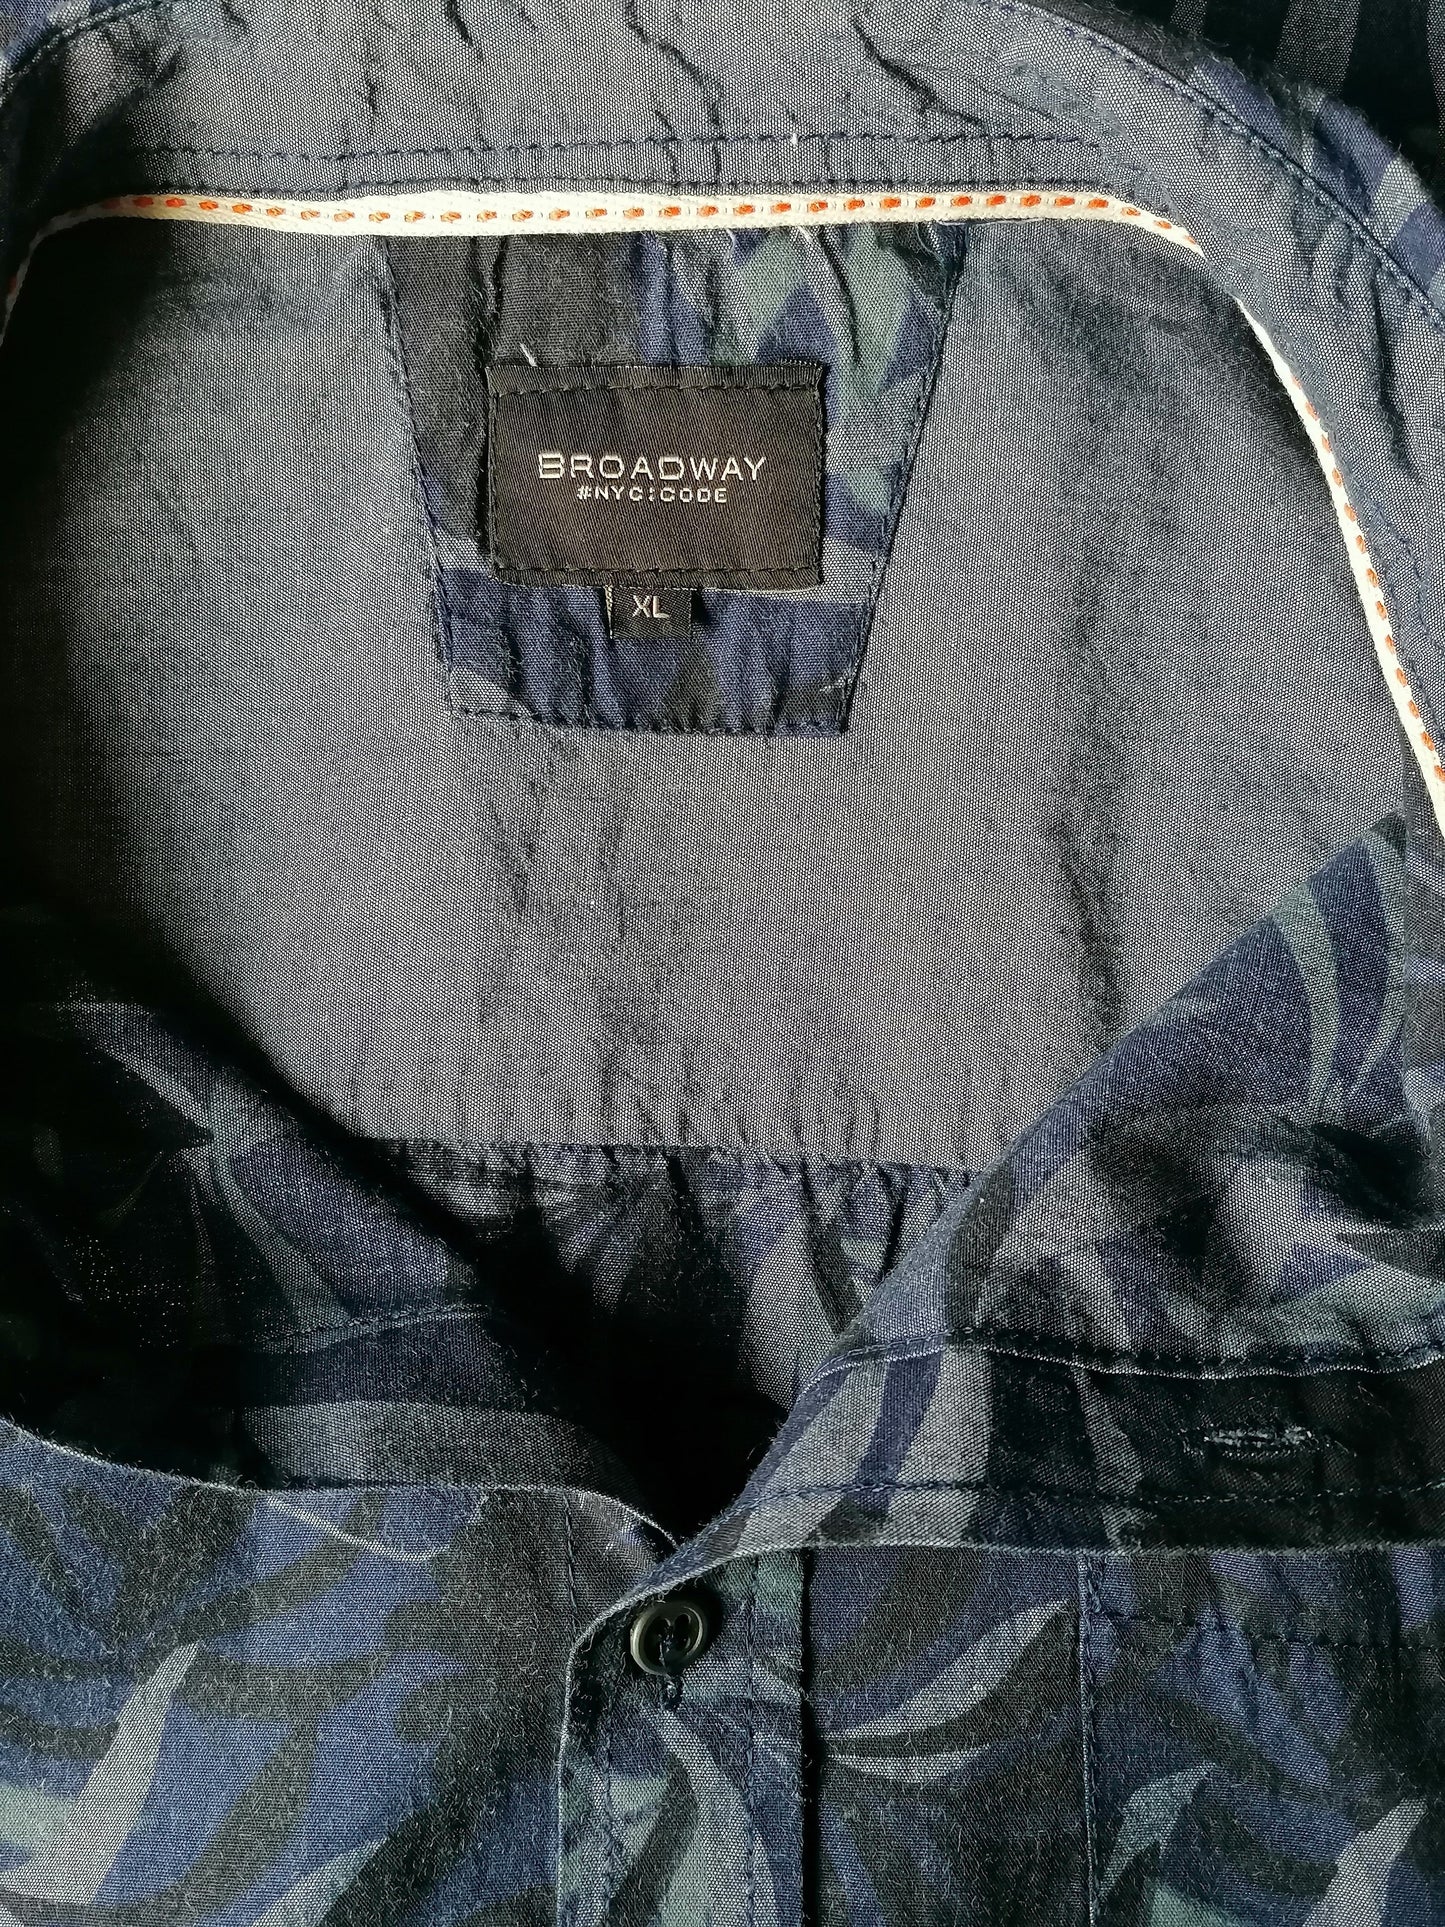 Shirtway Shirt Casta corta. Fiori neri blu stampa. Taglia XL.